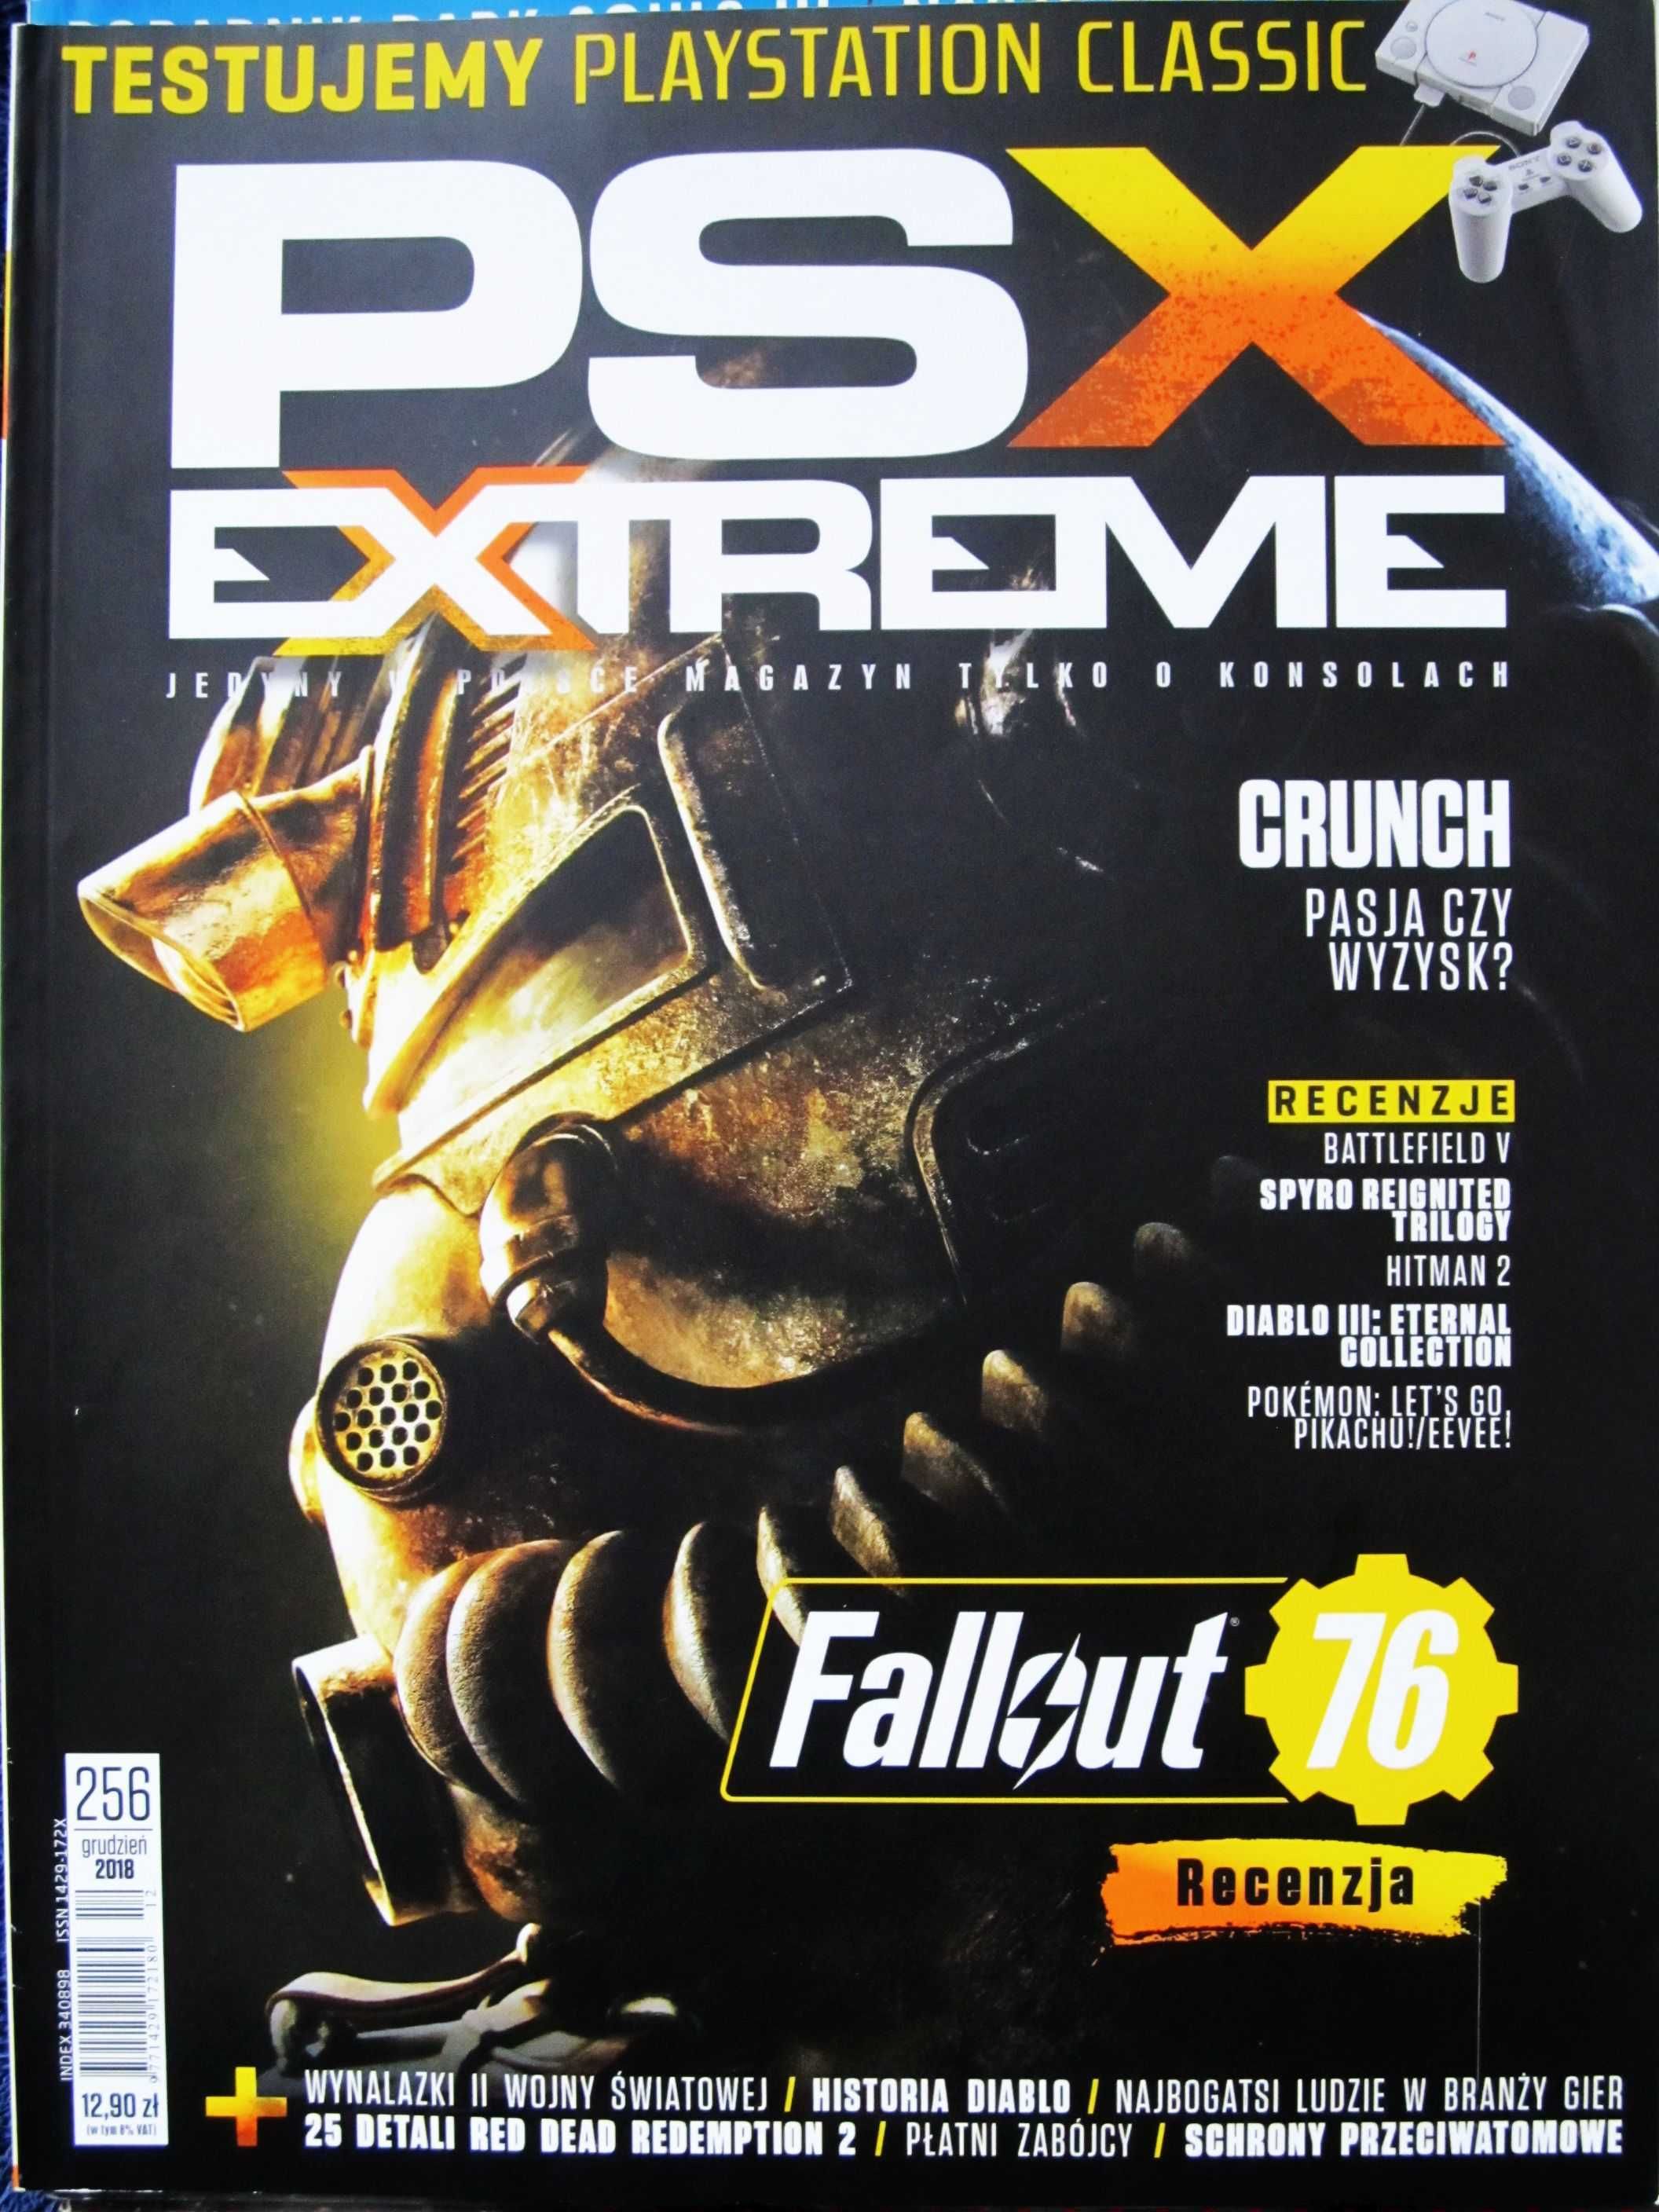 PSX Extreme 256 grudzień 2018 Crunch,Fallout,Battlefield V,Diablo III